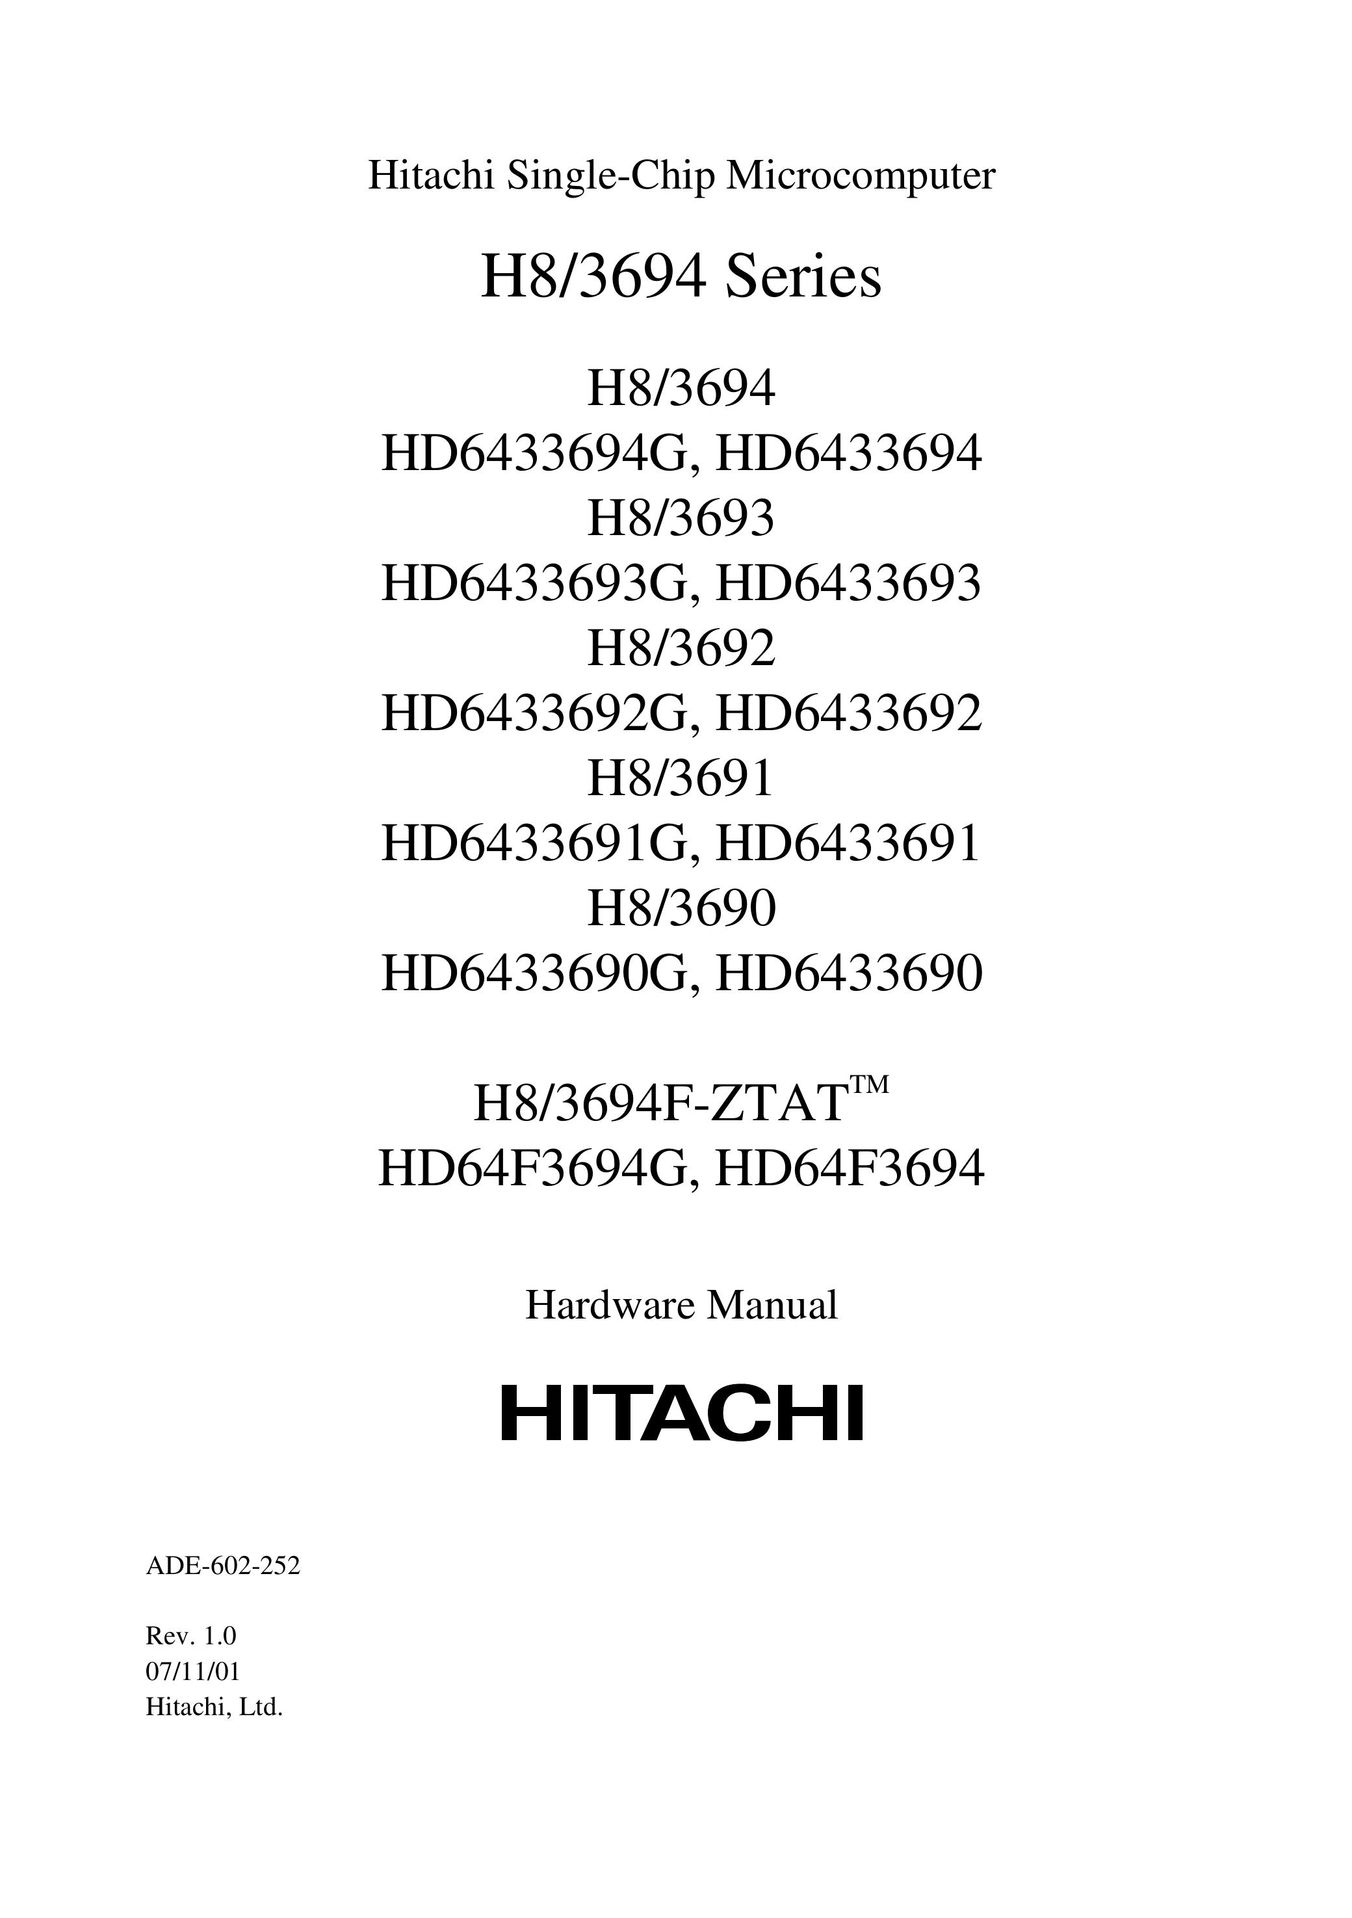 Hitachi HD/3691 TV Mount User Manual